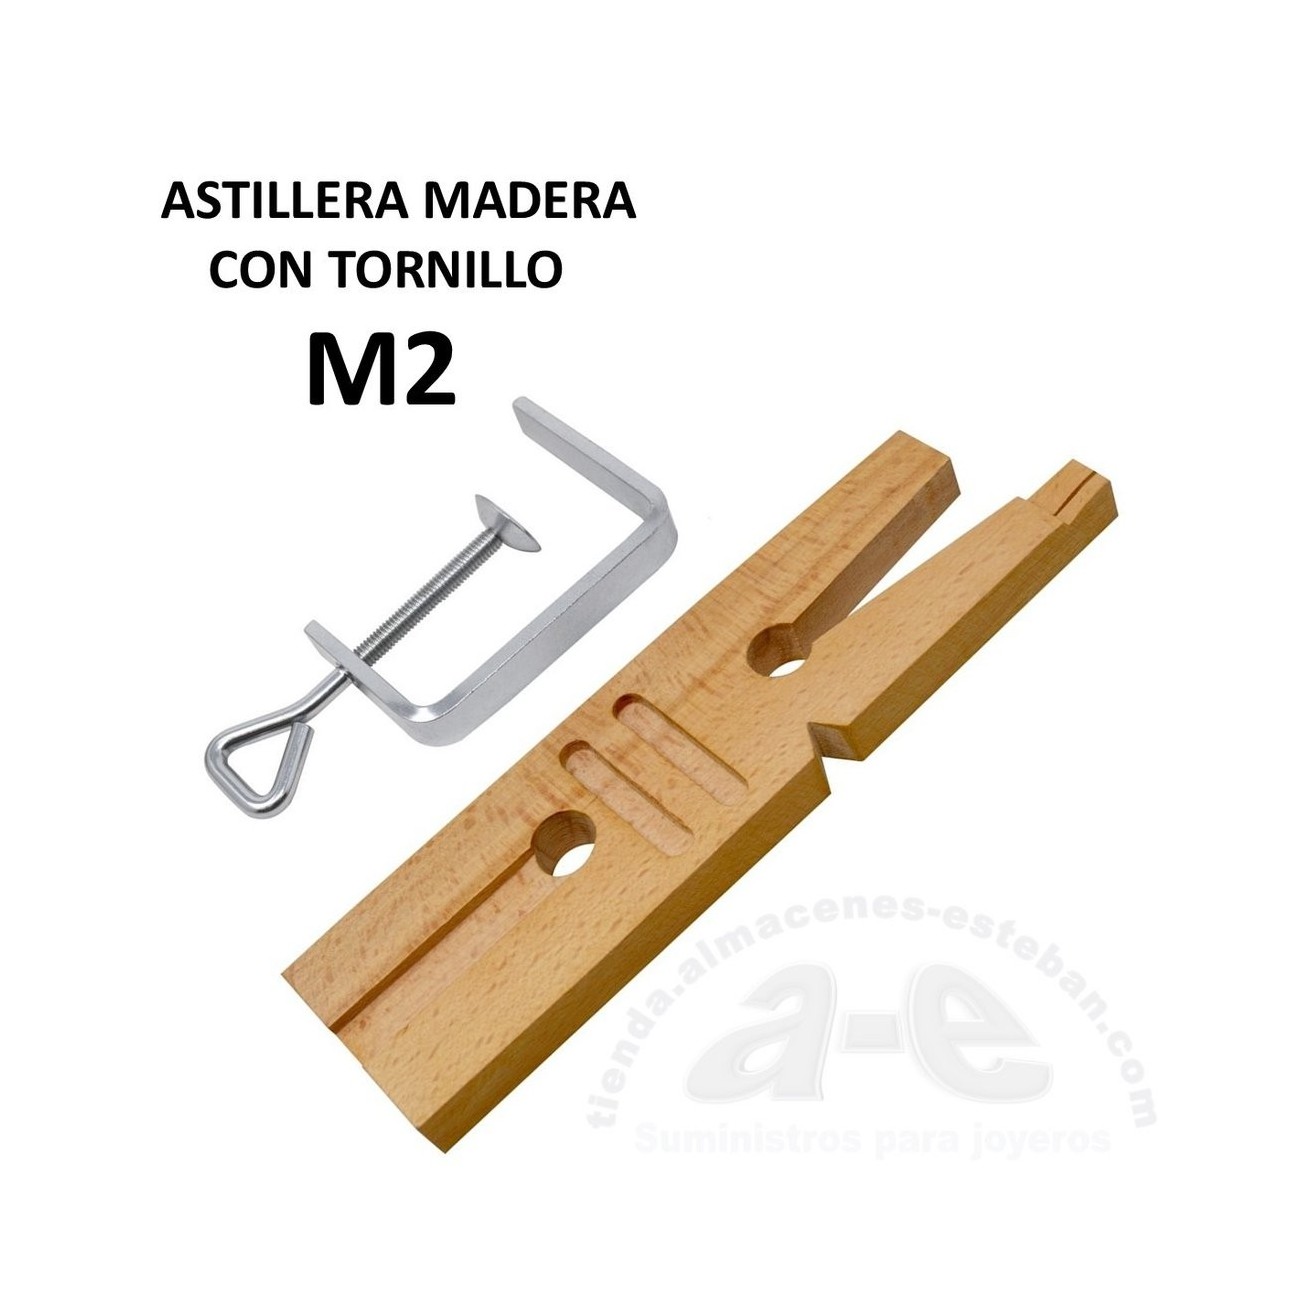 ASTILLERA MADERA CON TORNILLO M2